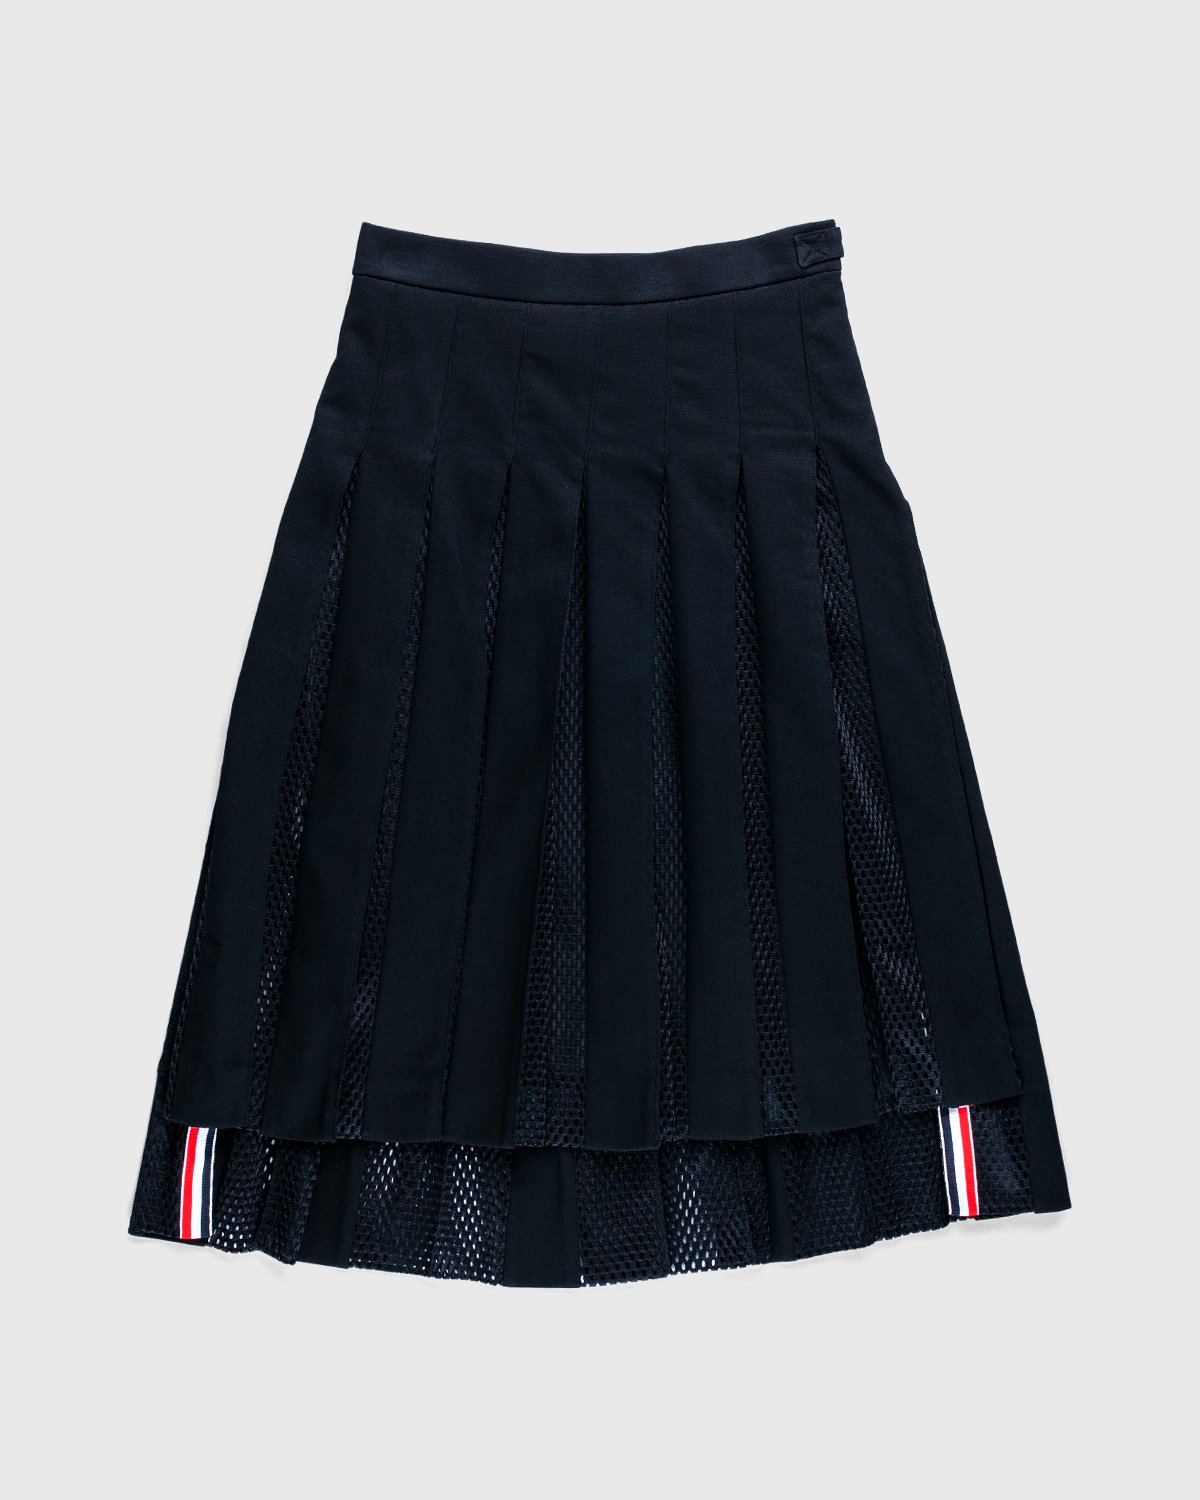 Thom Browne x Highsnobiety - Men's Pleated Mesh Skirt Black - Clothing - Black - Image 1